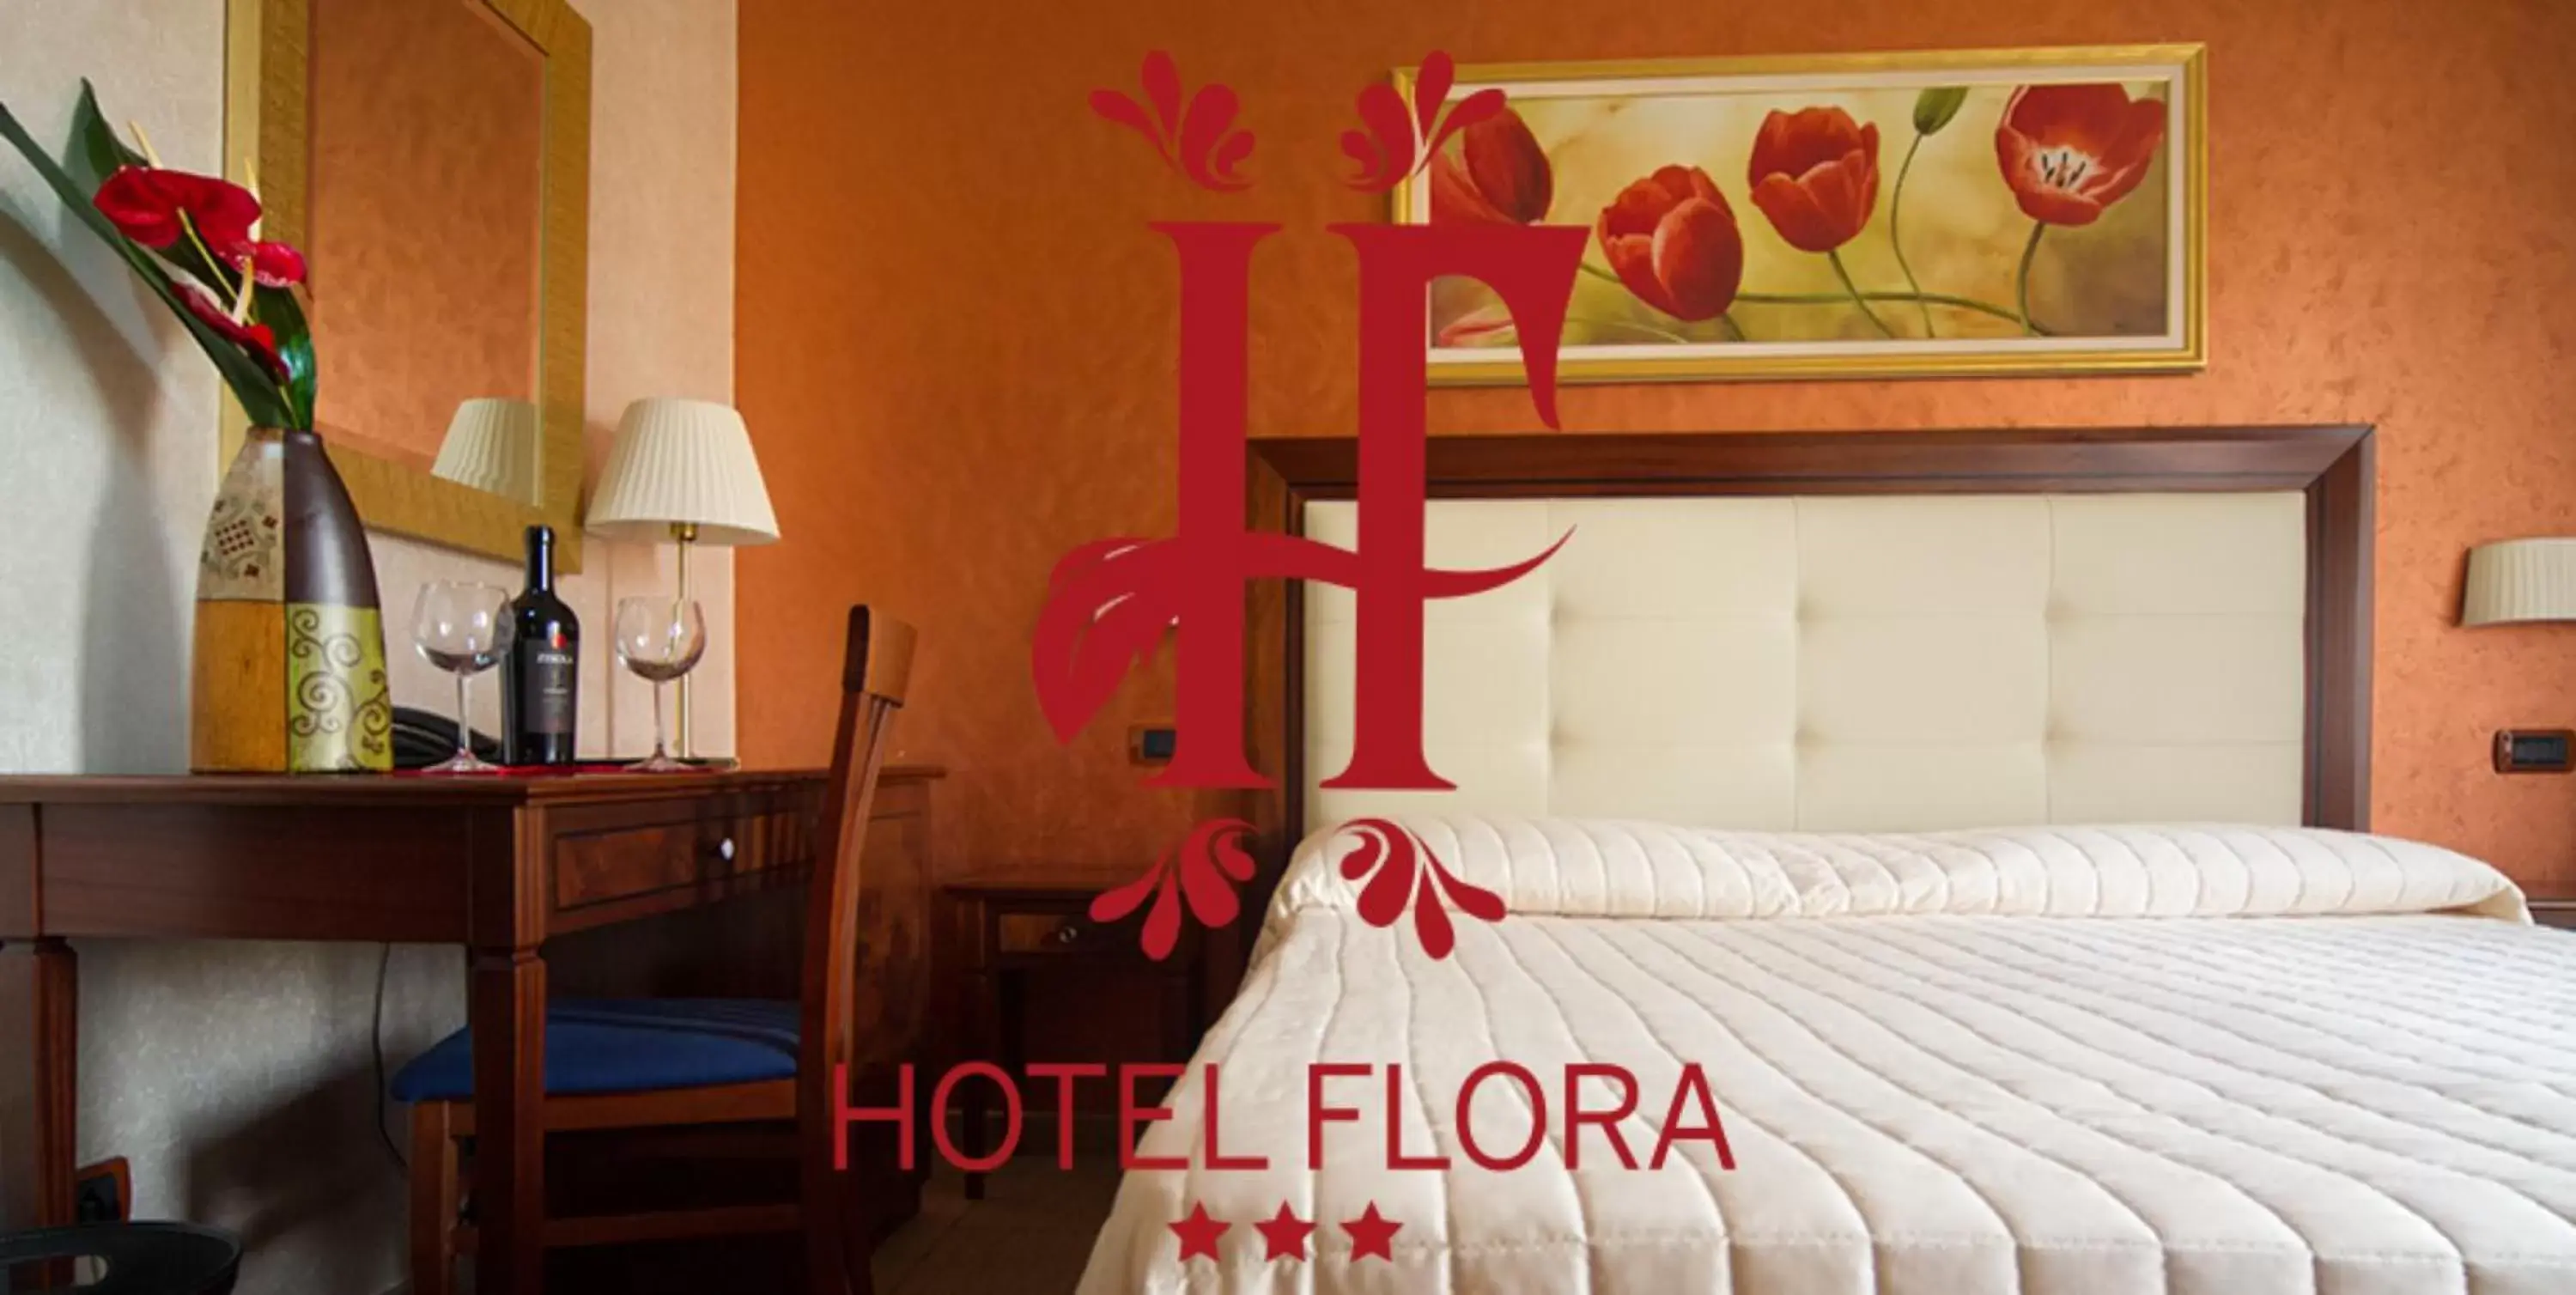 Decorative detail in Hotel Flora